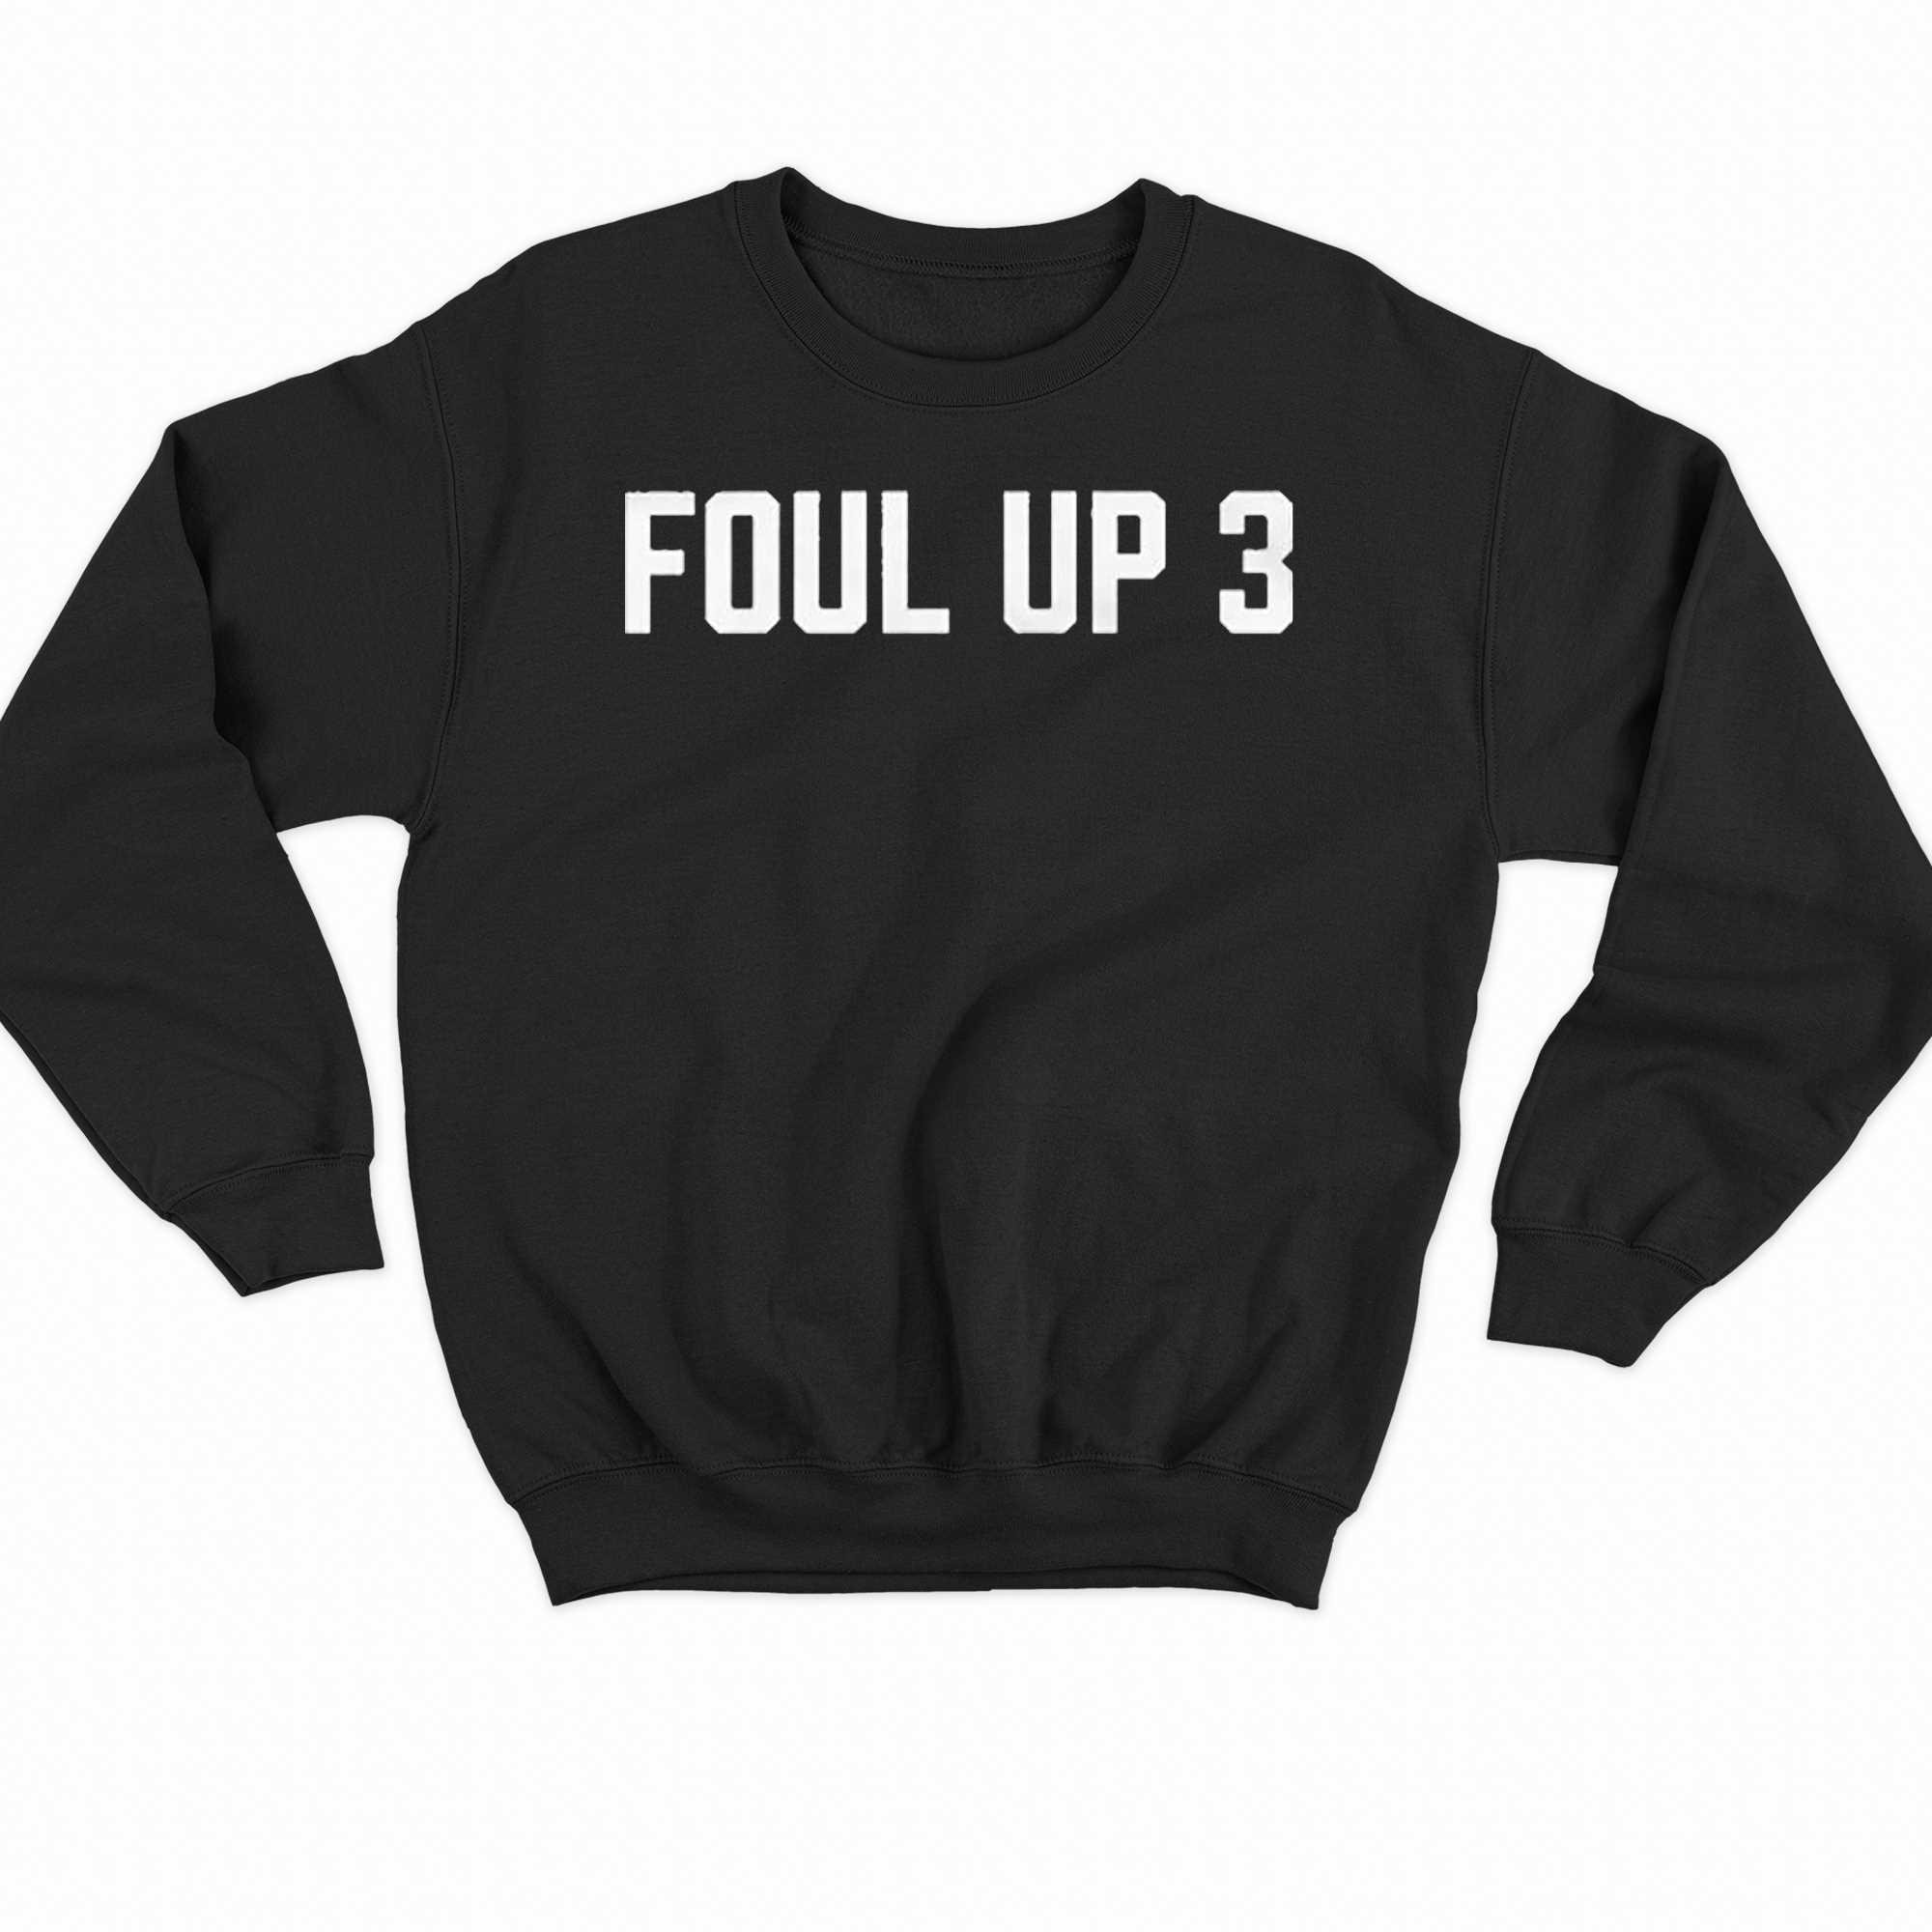 Official Foul Up 3 Shirt 